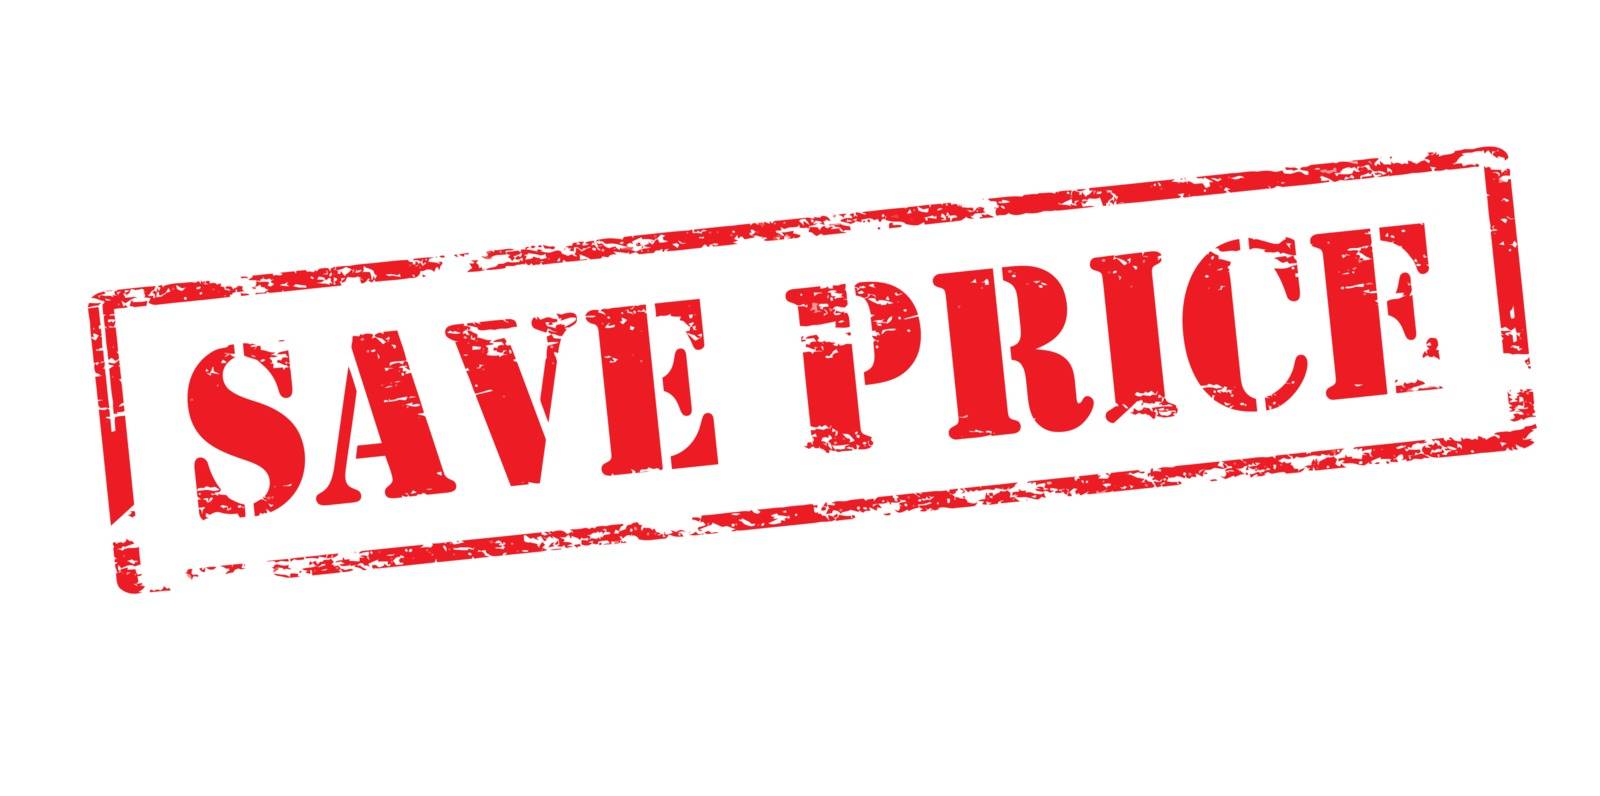 Save price by carmenbobo